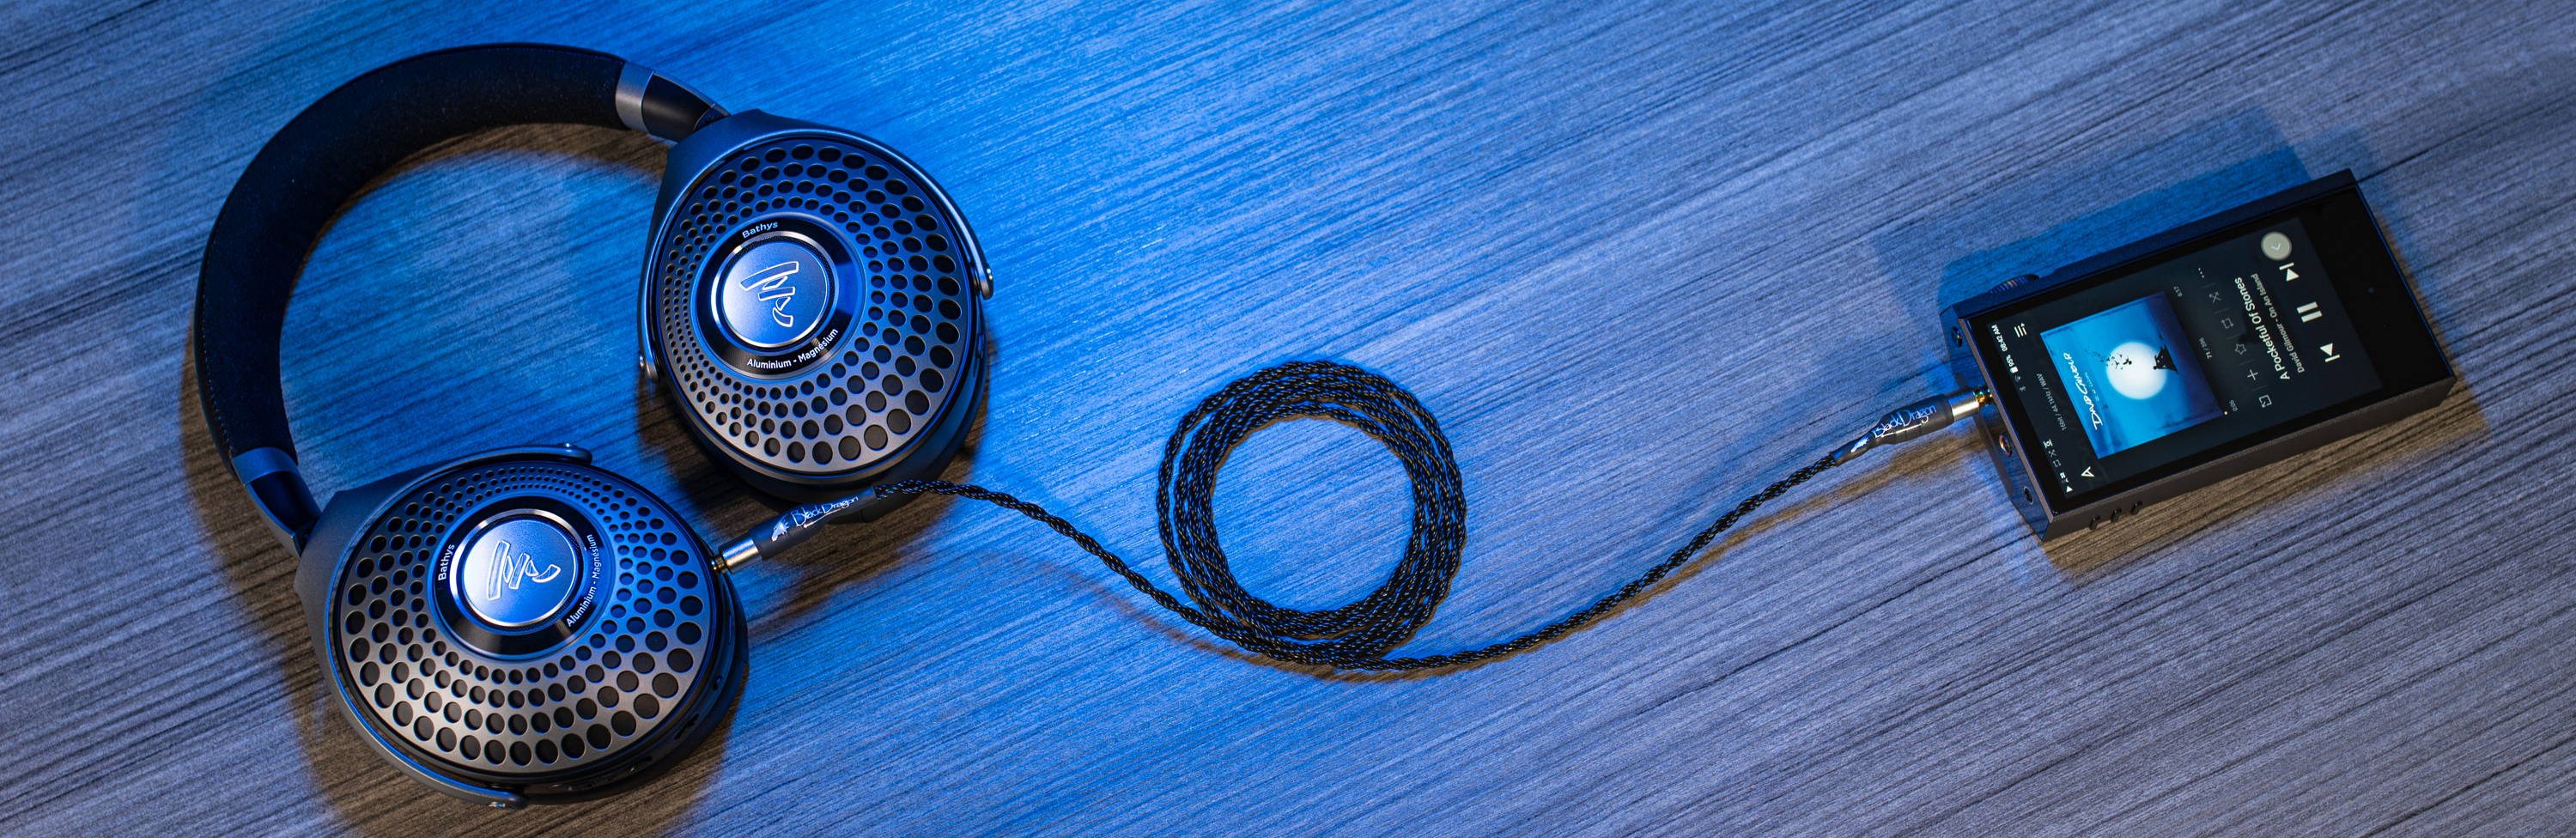 Focal Bathys headphones KANN Max DAP Black Dragon Portable headphone cable